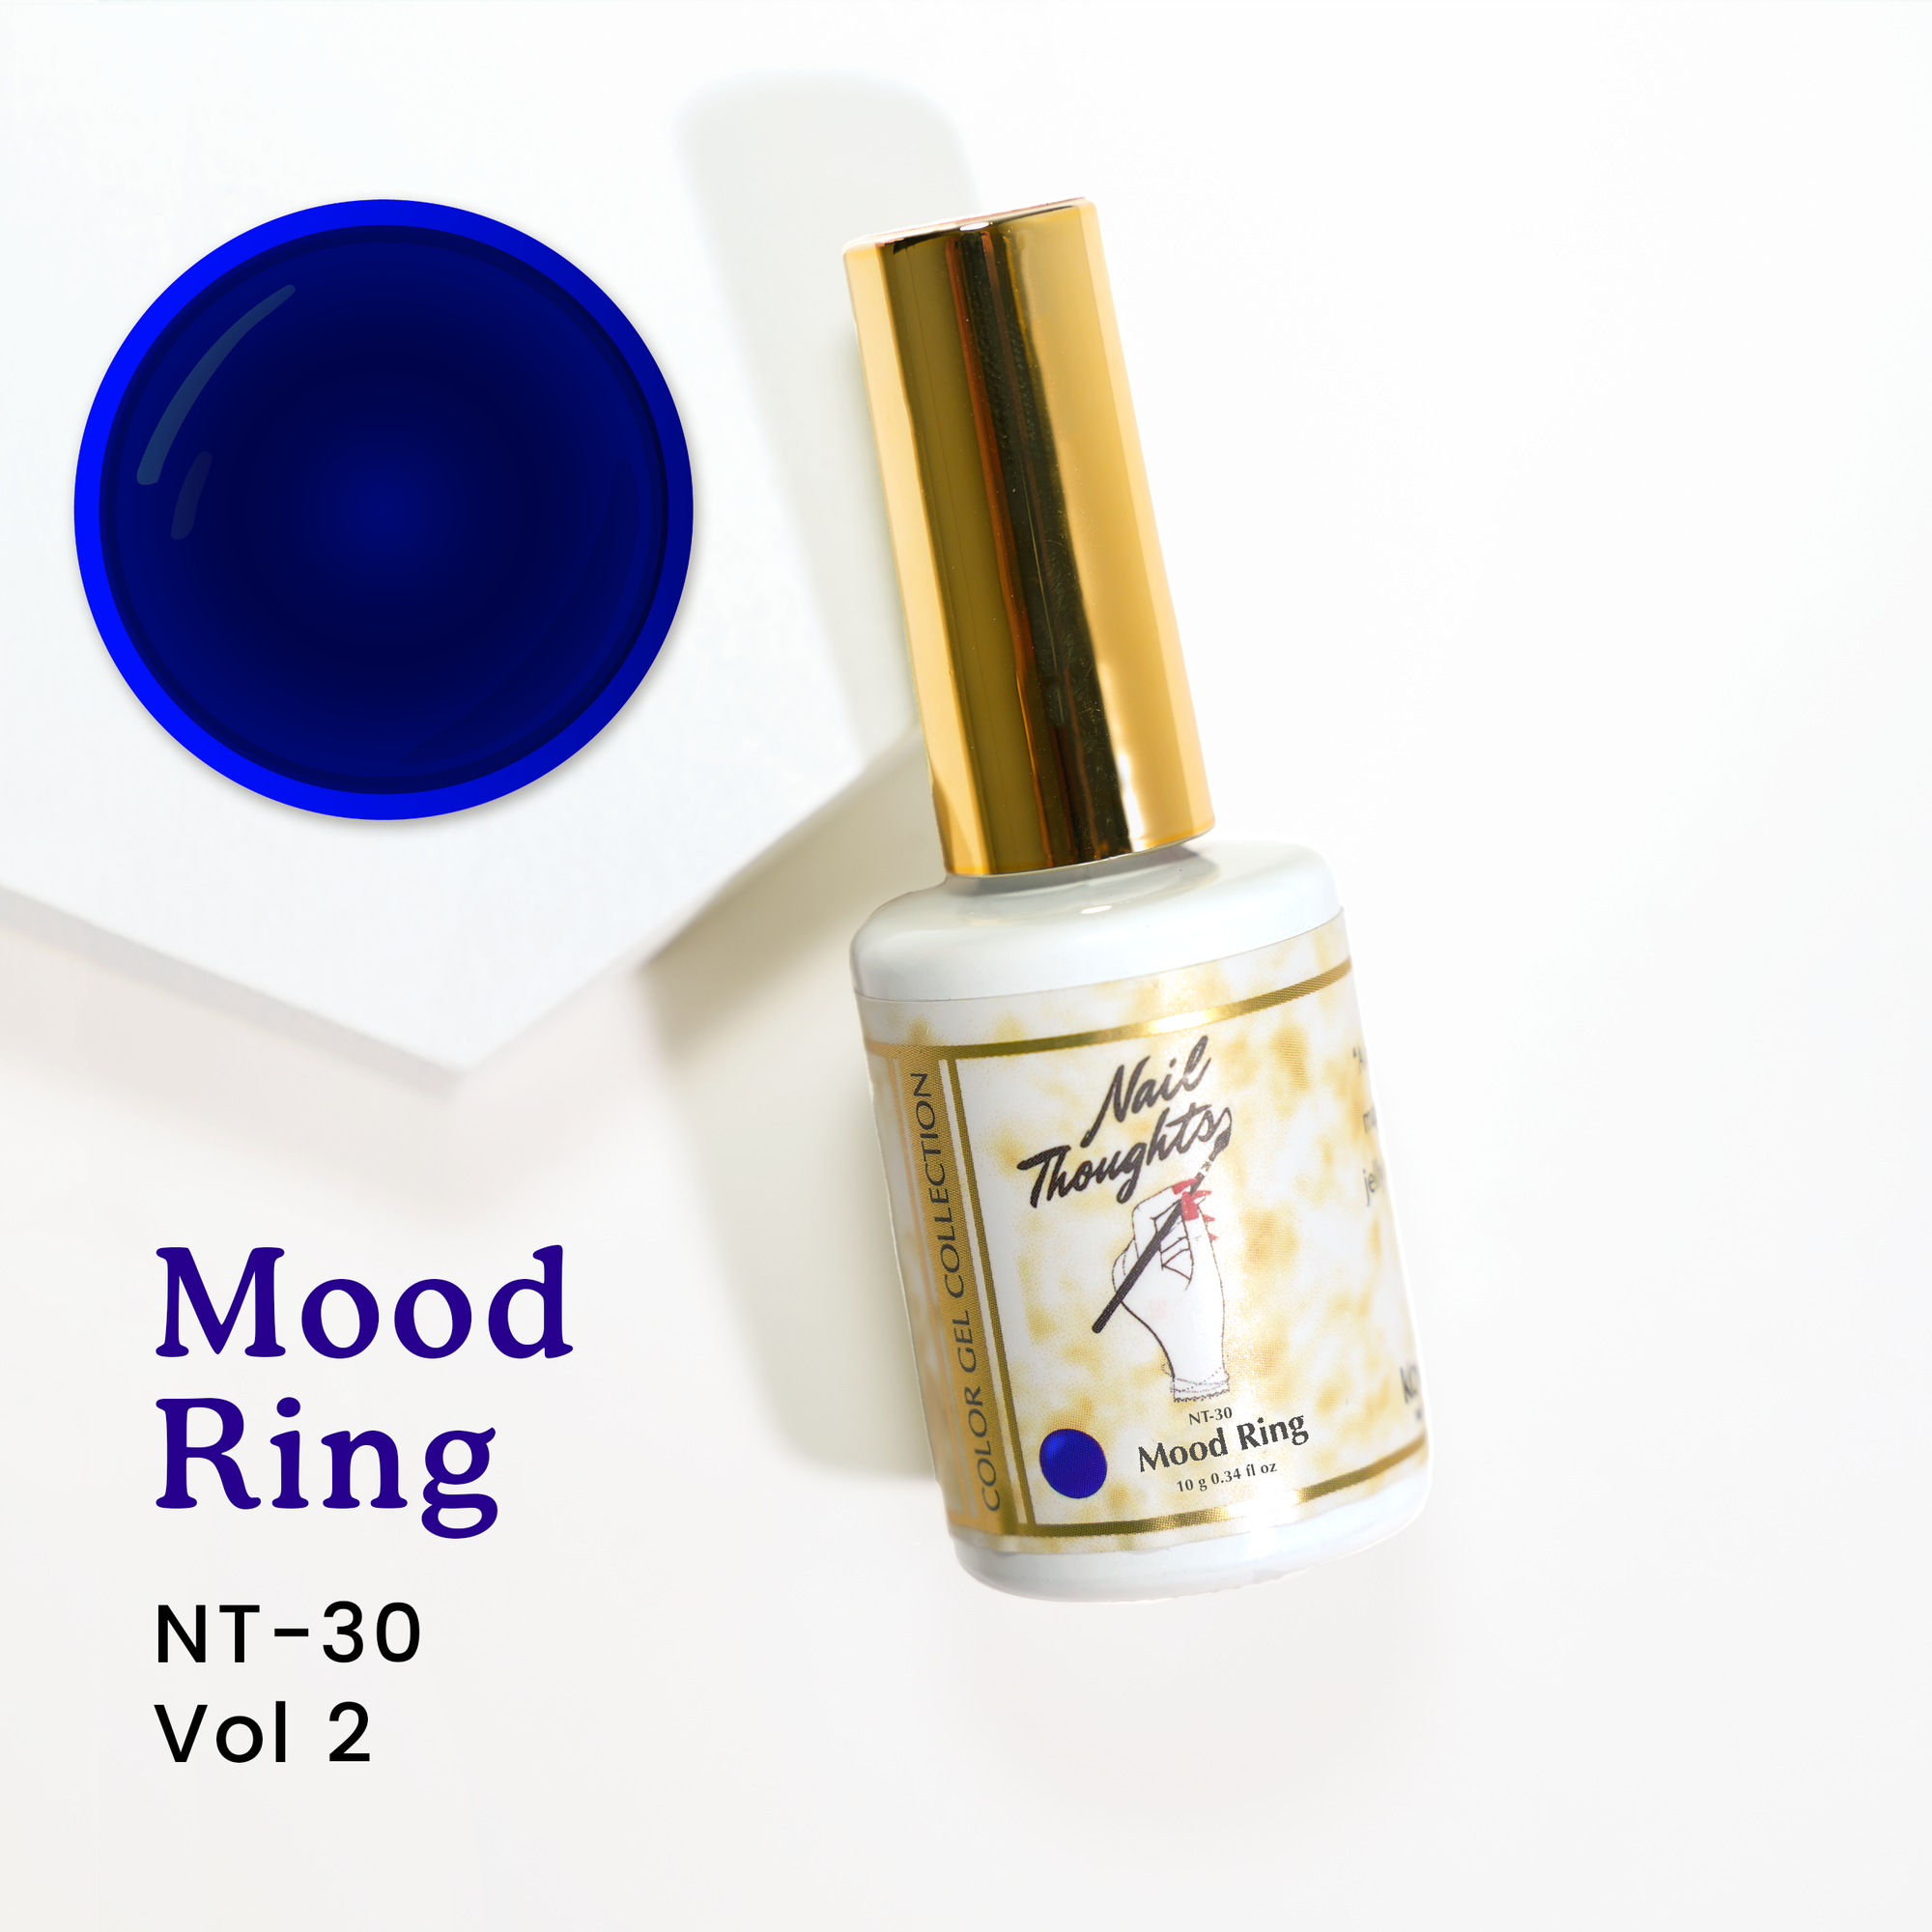 Mood Ring NT-30